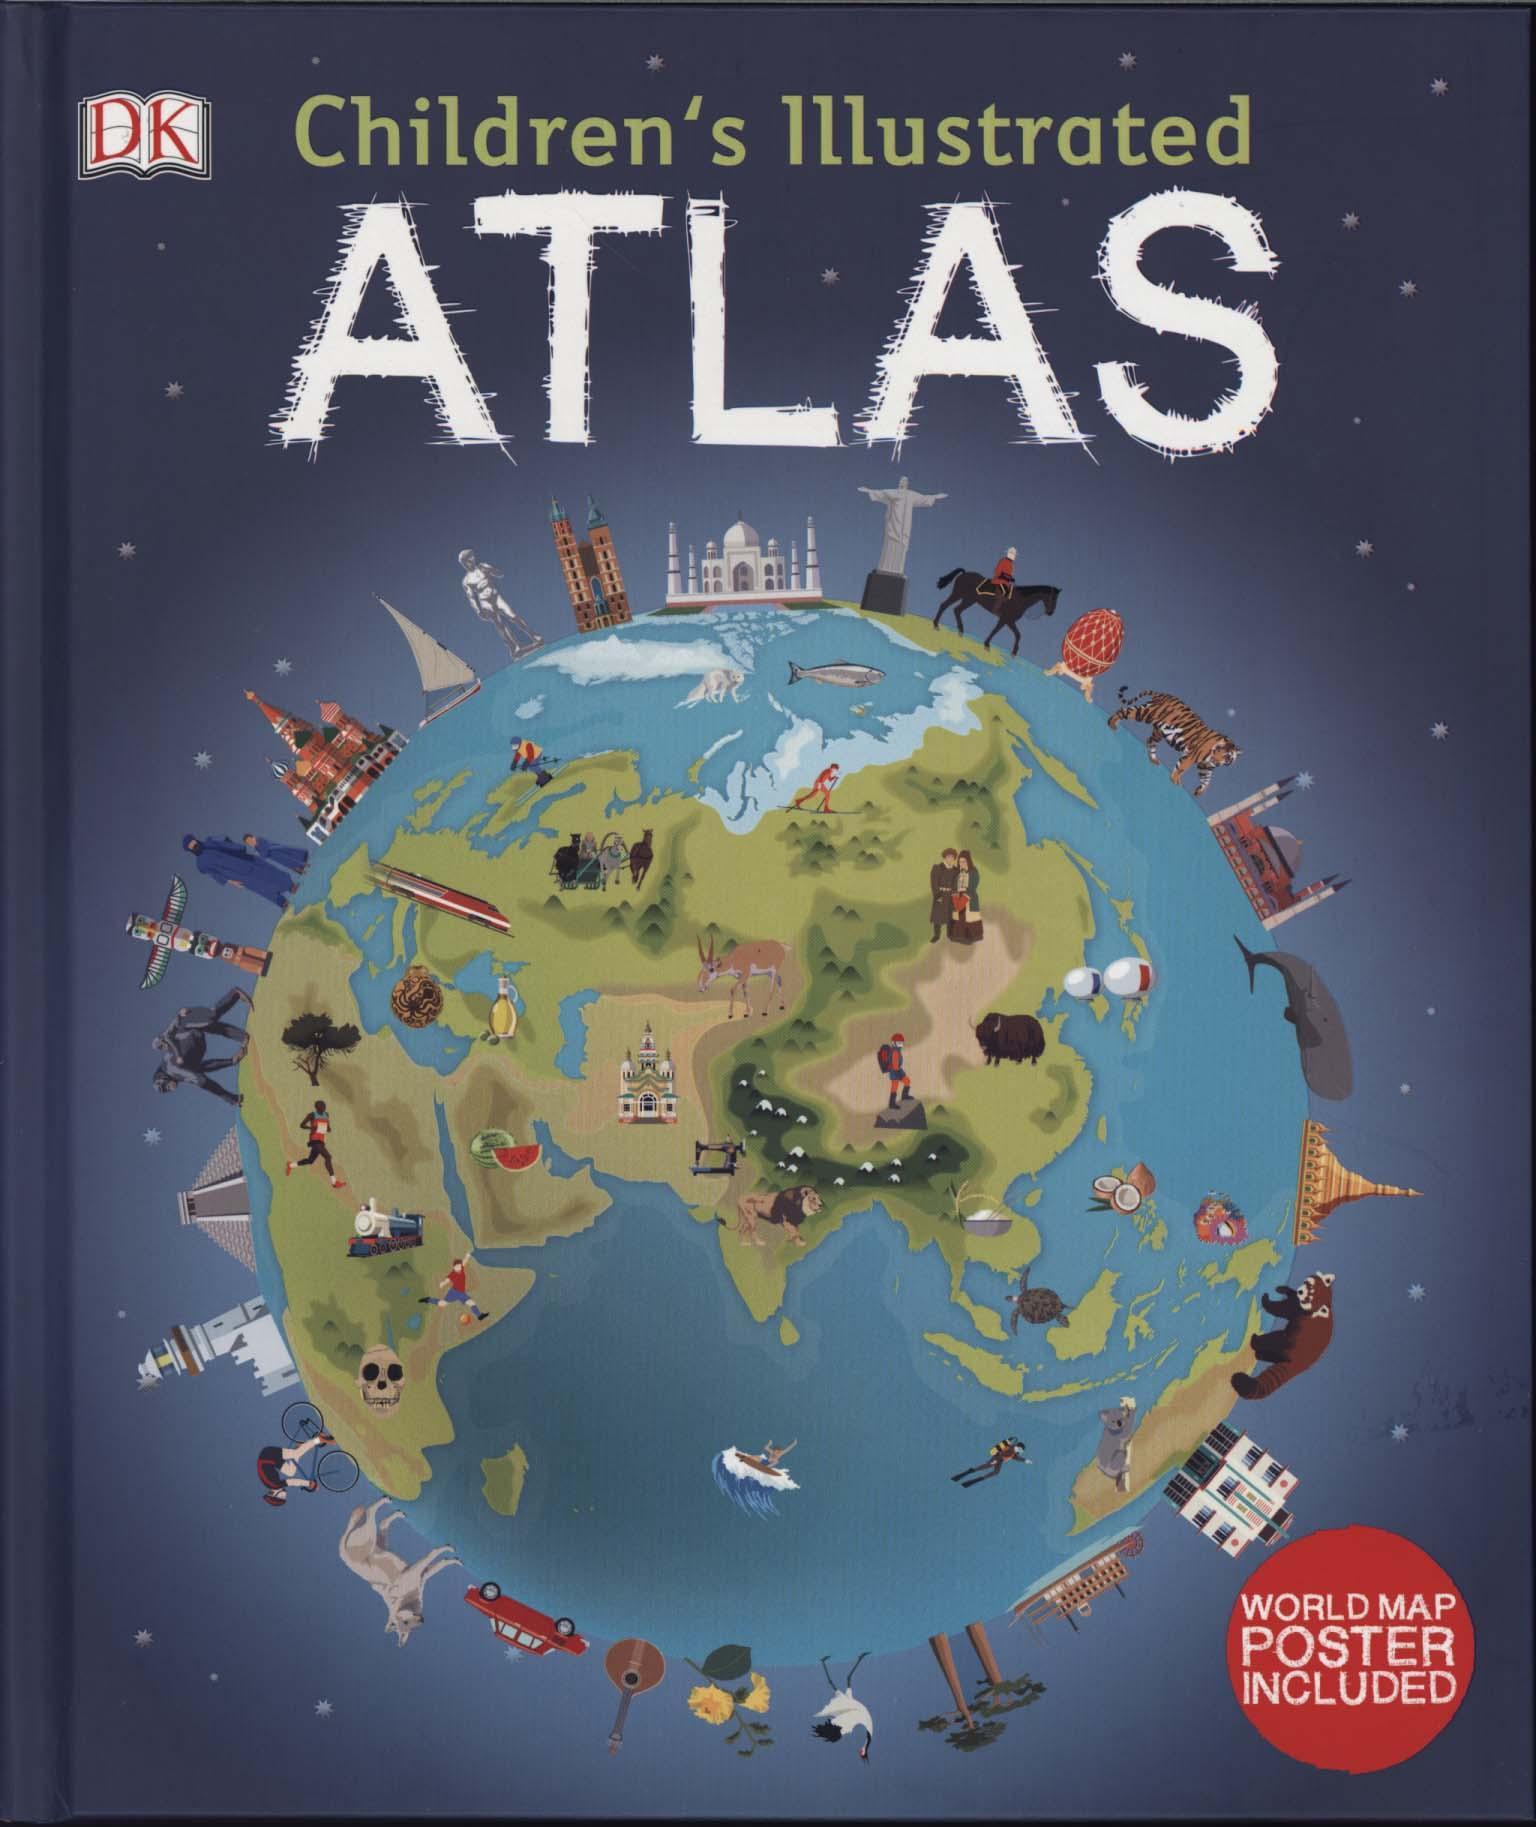 Children's Illustrated Atlas